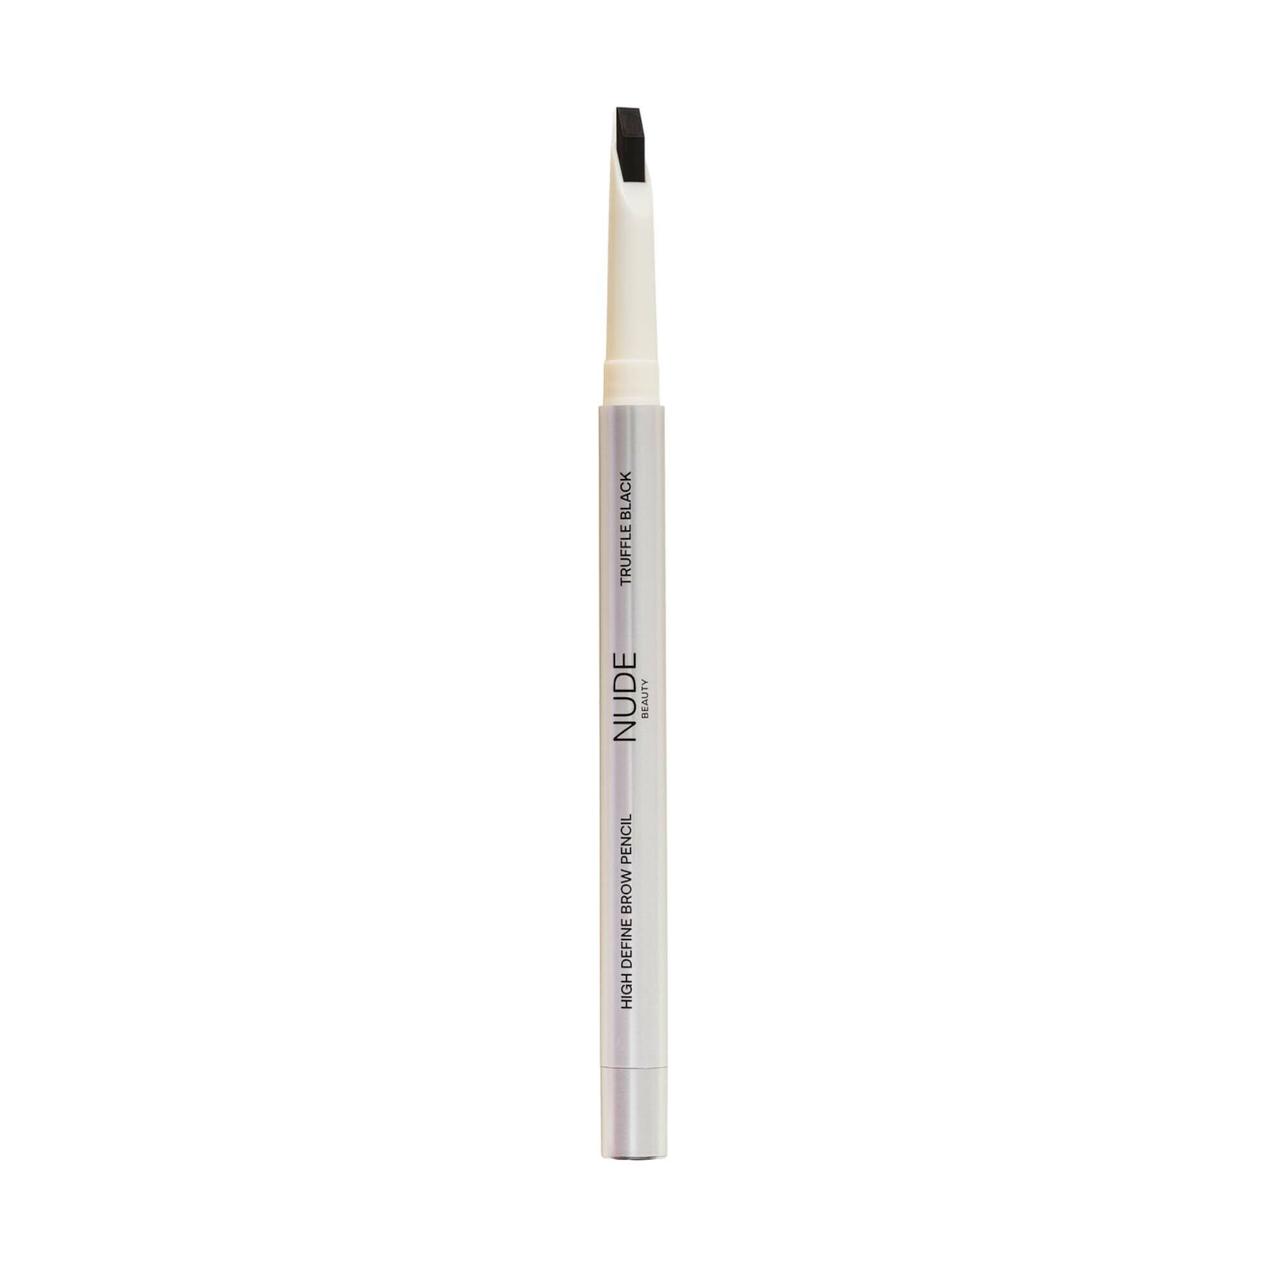 Tilbud: Nude Beauty High Define Brow Pencil Truffle Black kr 199,2 på VITA